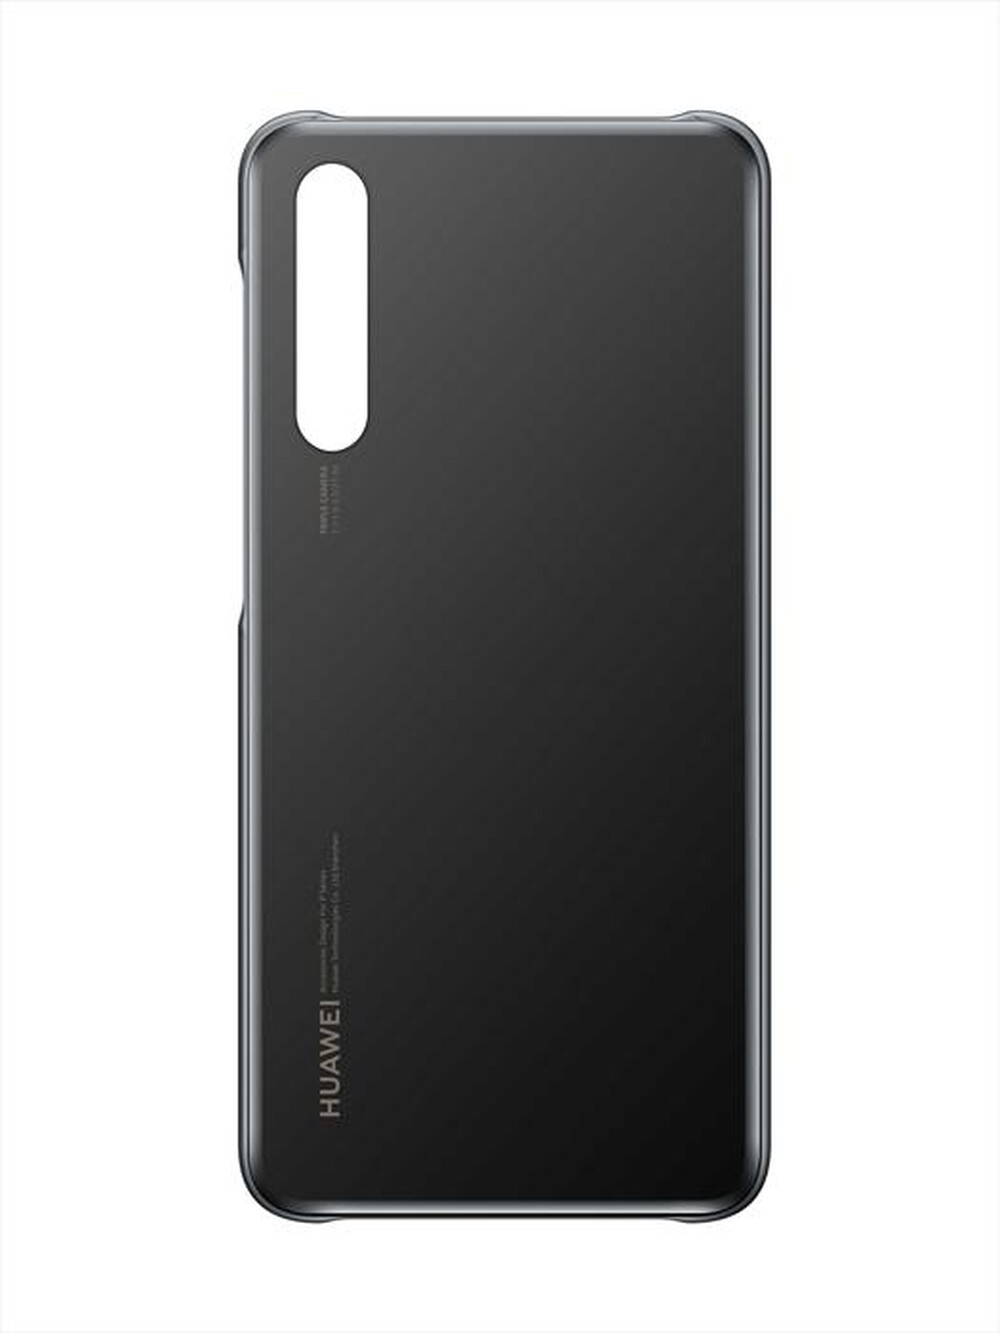 "HUAWEI - P20 Pro Color Hard Case-Nero"